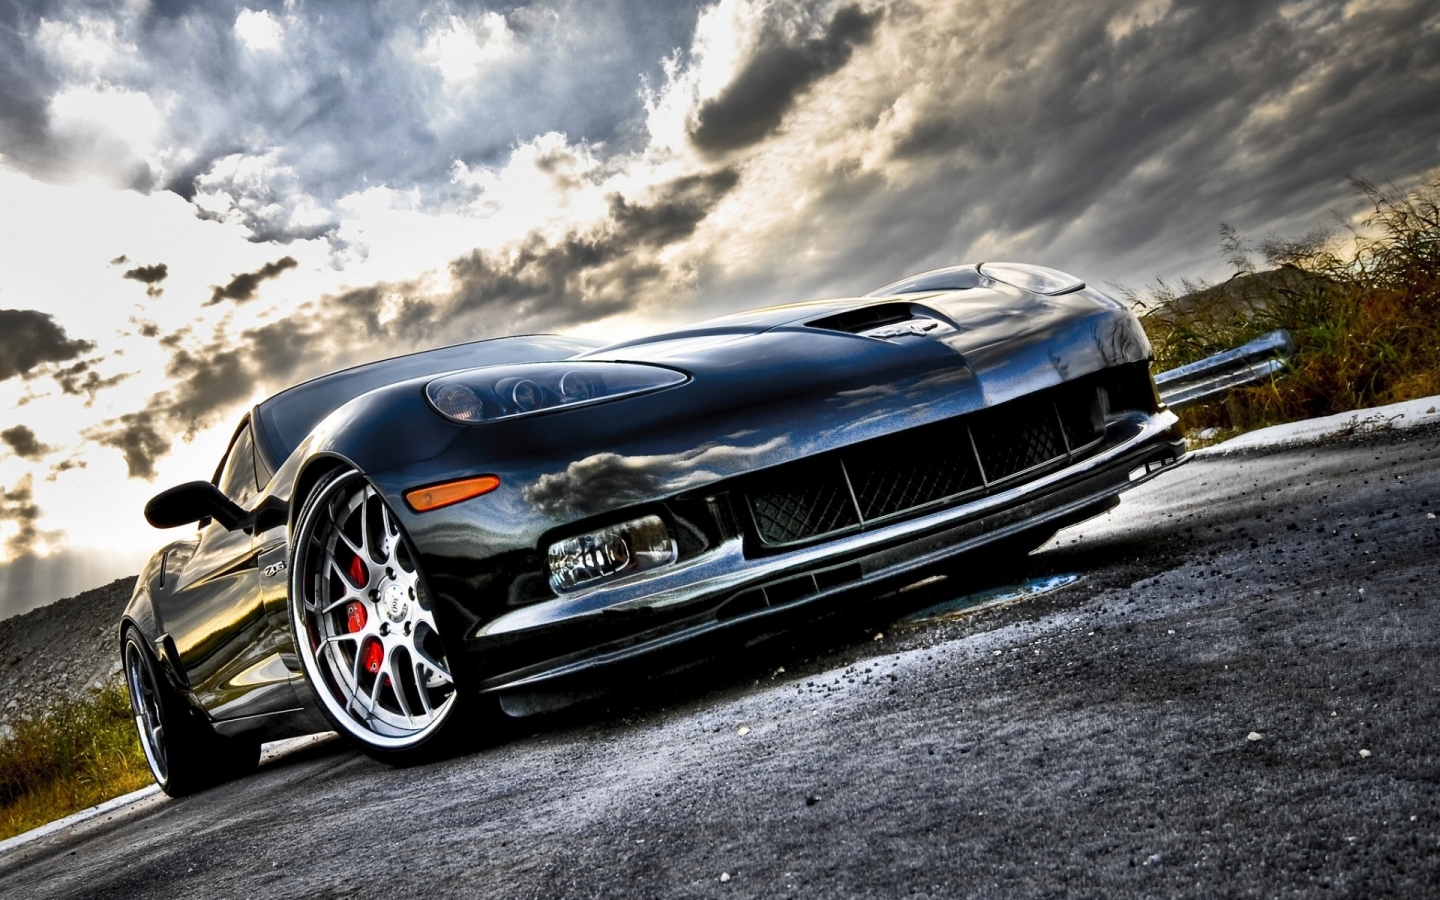 Corvette Super Sport Front Angle for 1440 x 900 widescreen resolution